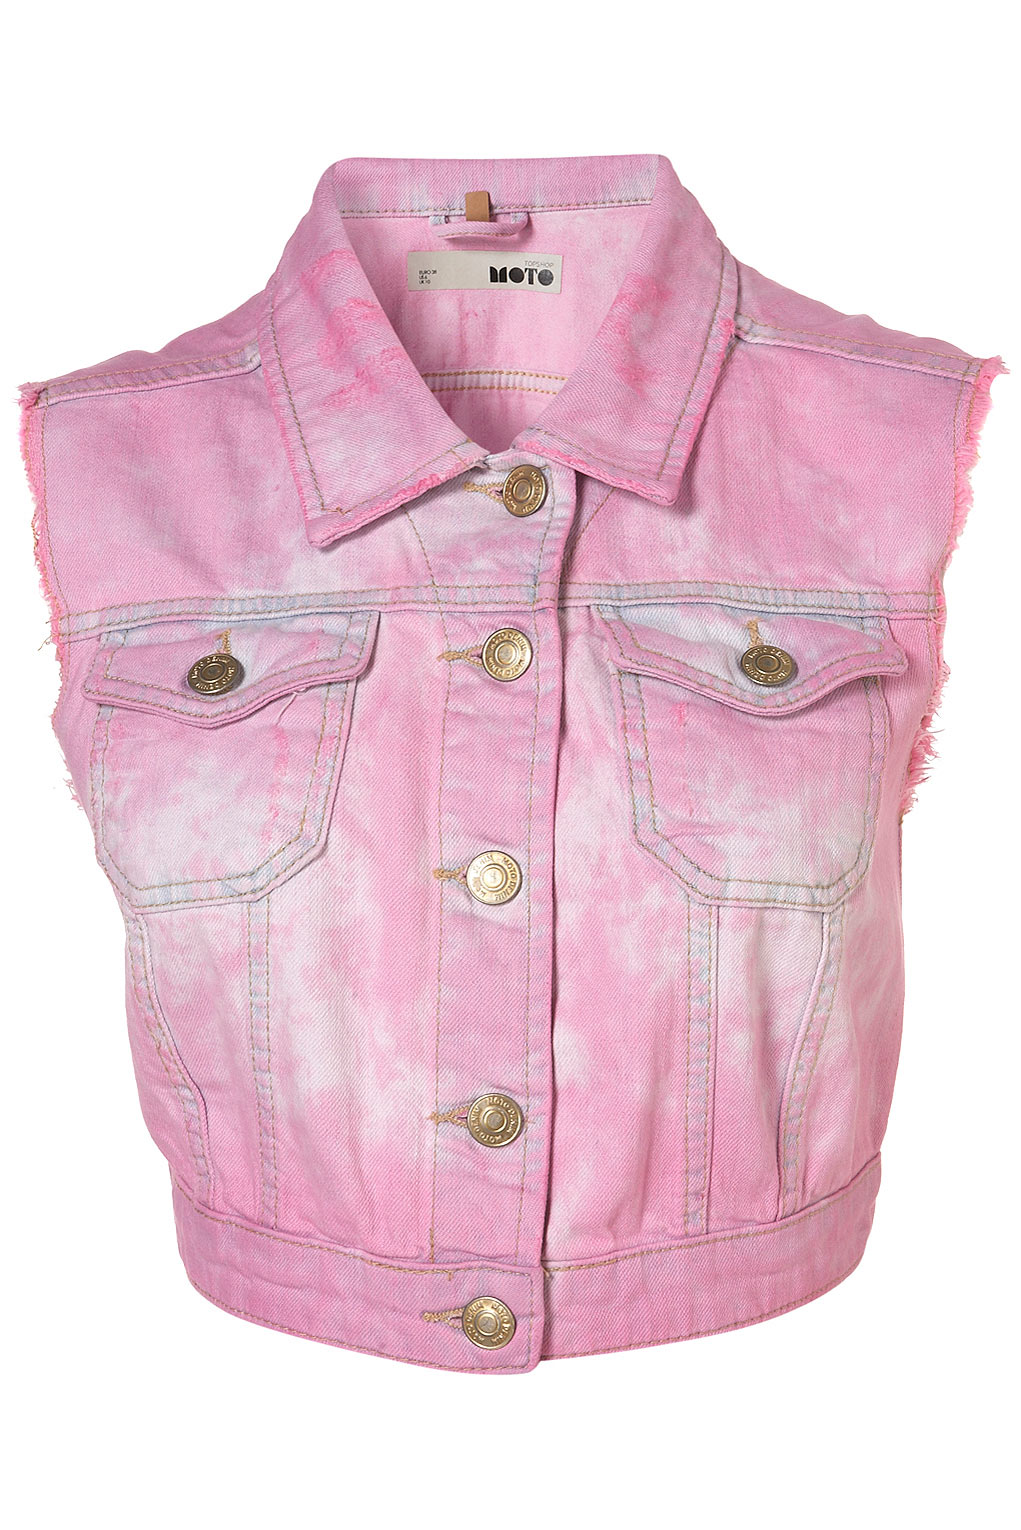 Lyst - Topshop Pink Marbled Denim Jacket in Pink